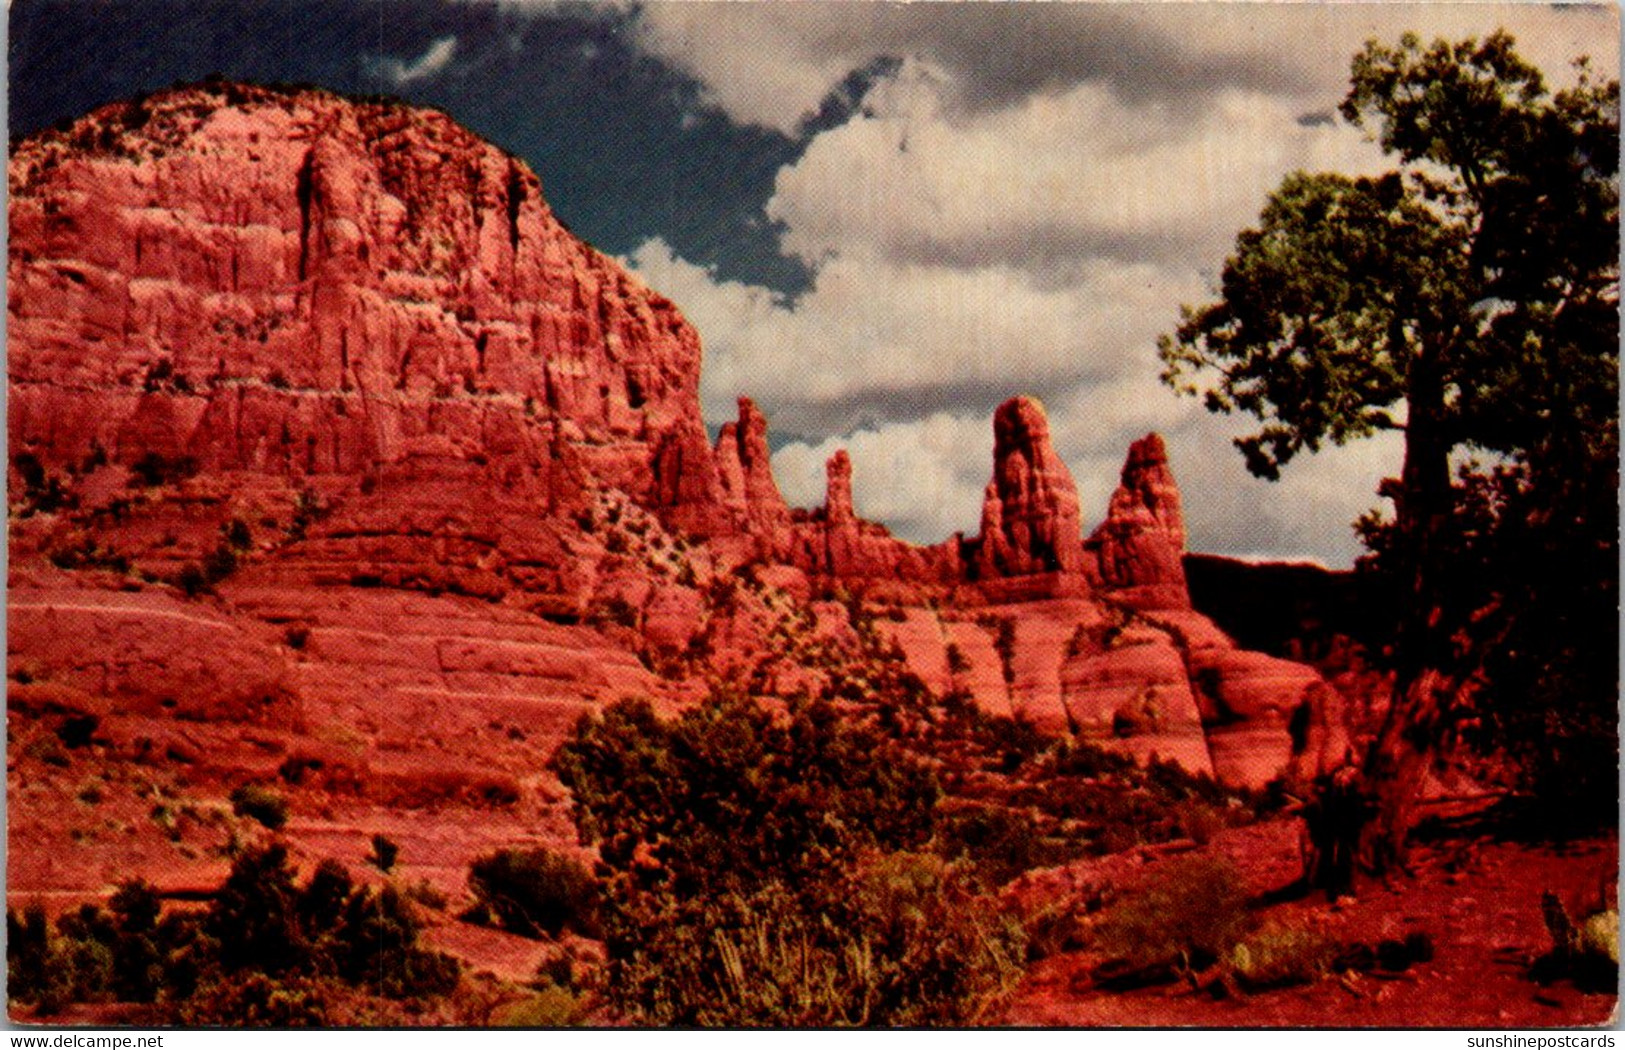 Arizona Oak Creek Canyon Red Rock Formations - Mesa